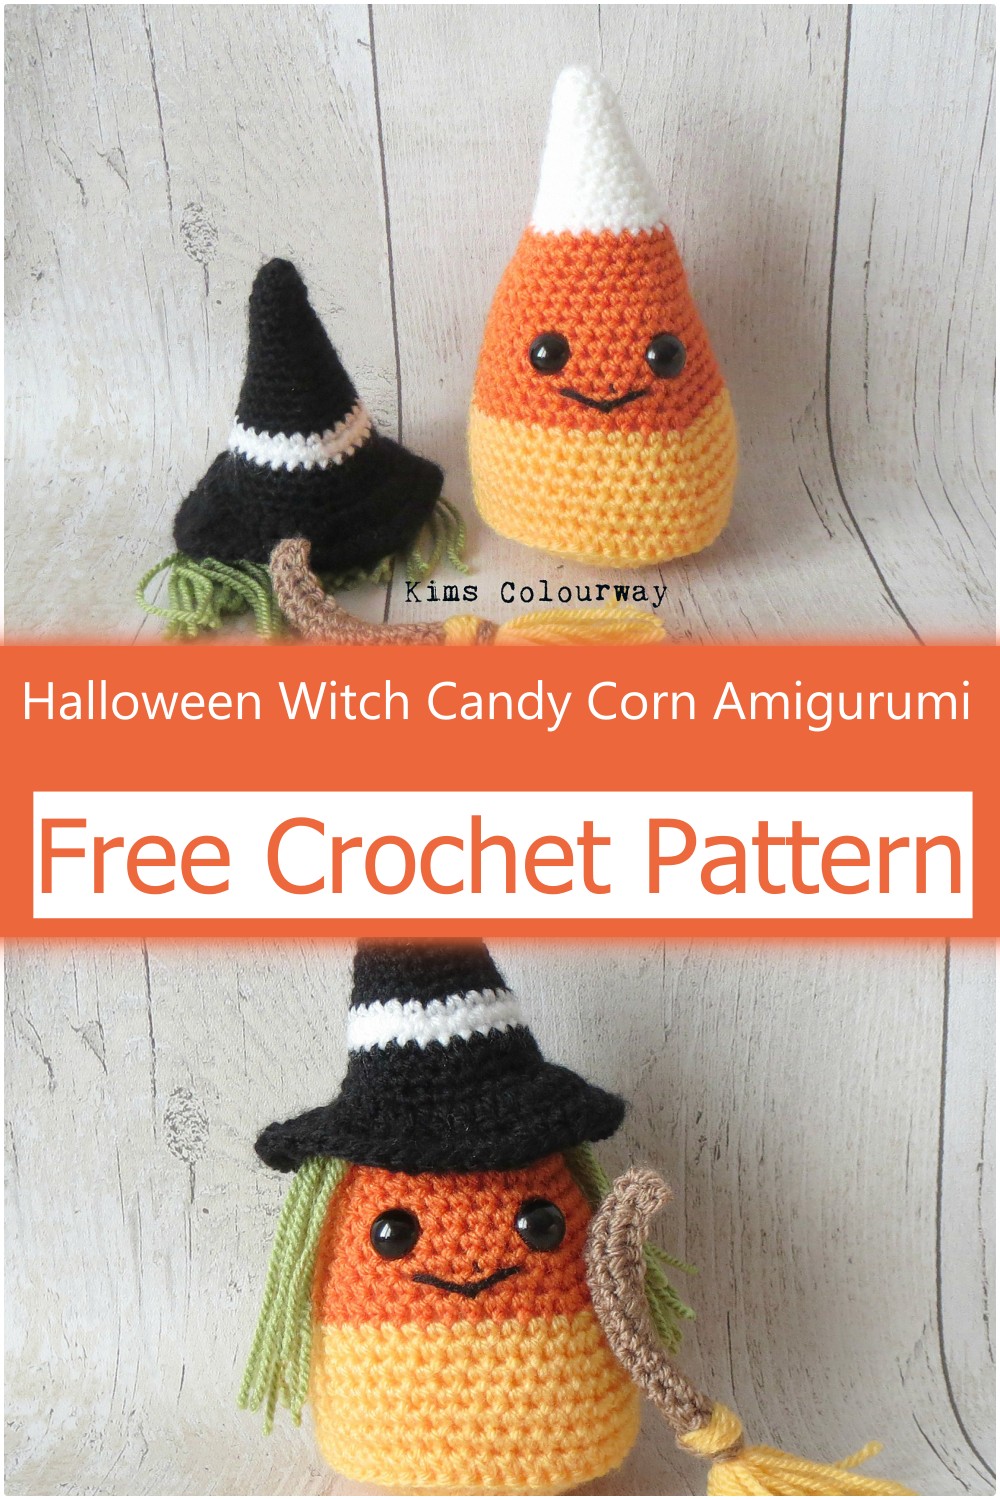 Crochet Halloween Witch Candy Corn Amigurumi